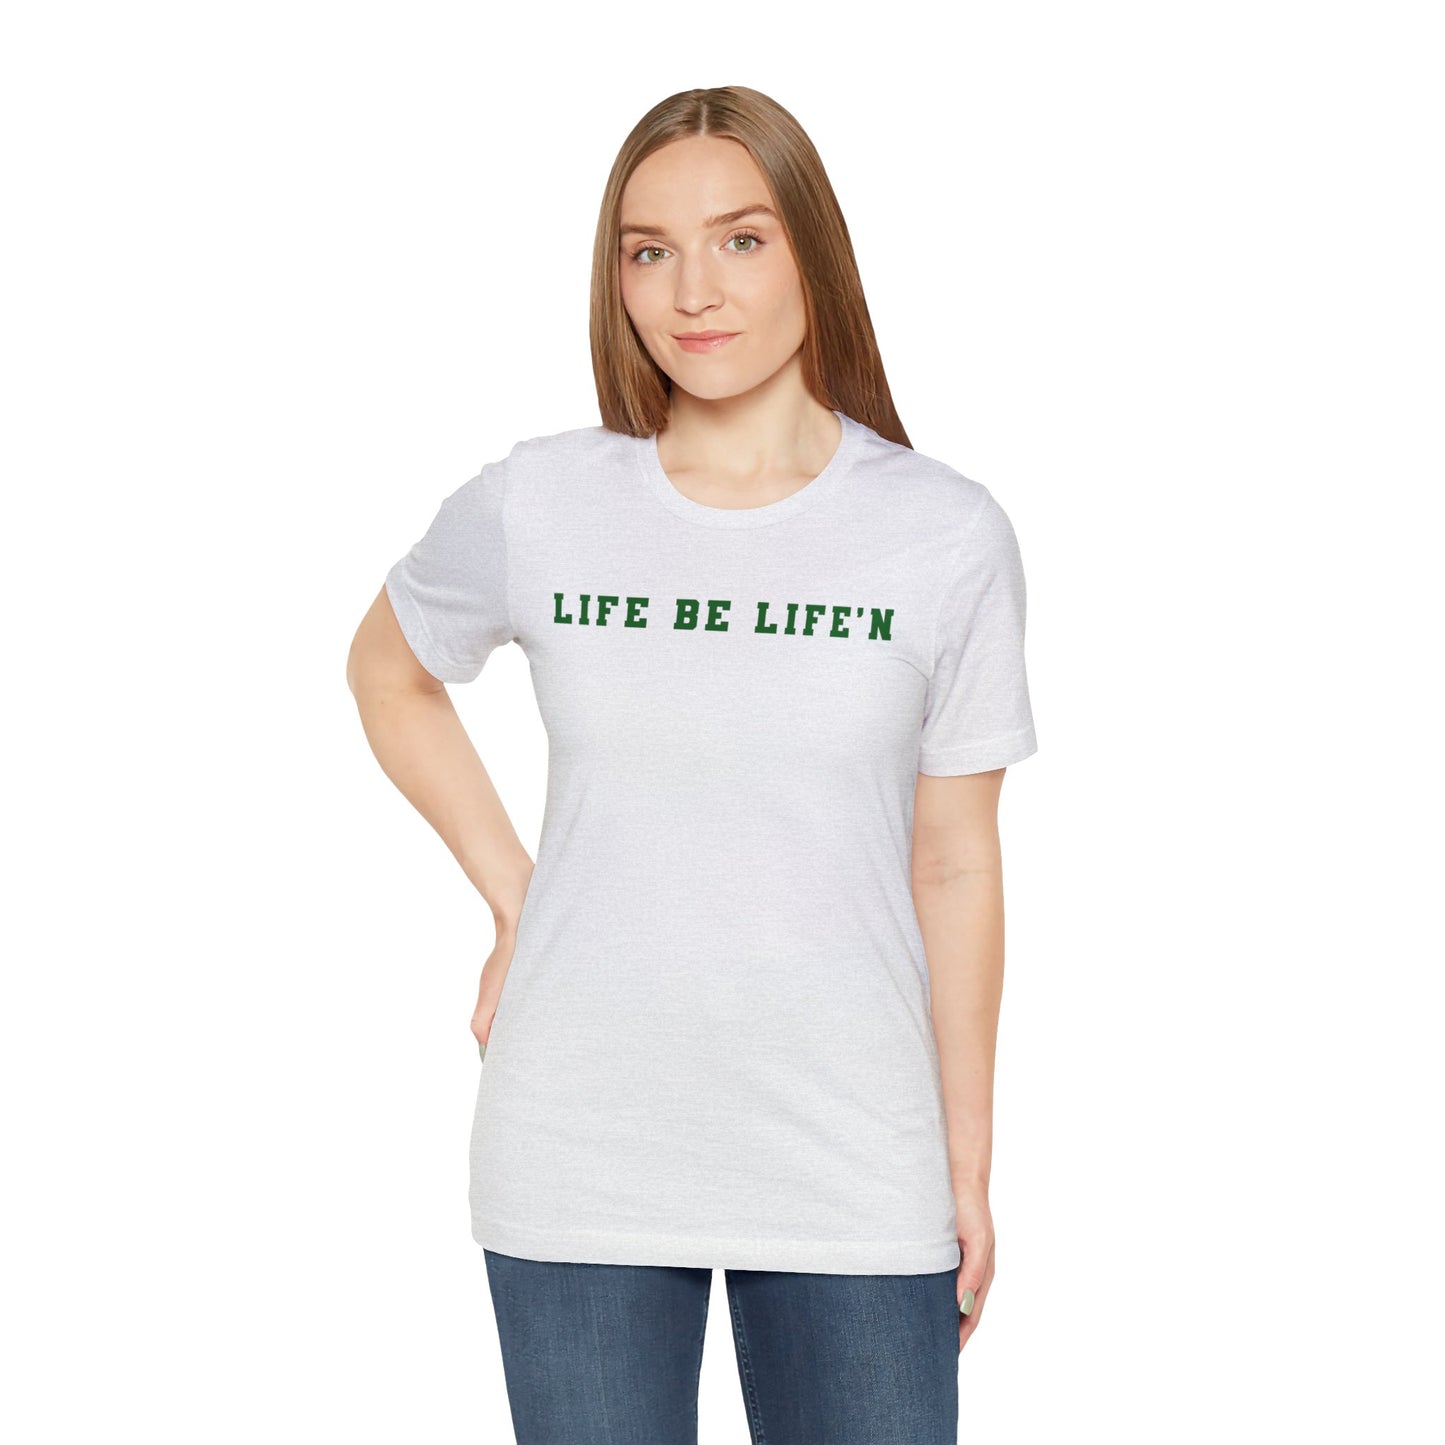 Green Life Be Life'n Unisex Jersey Short Sleeve Tee